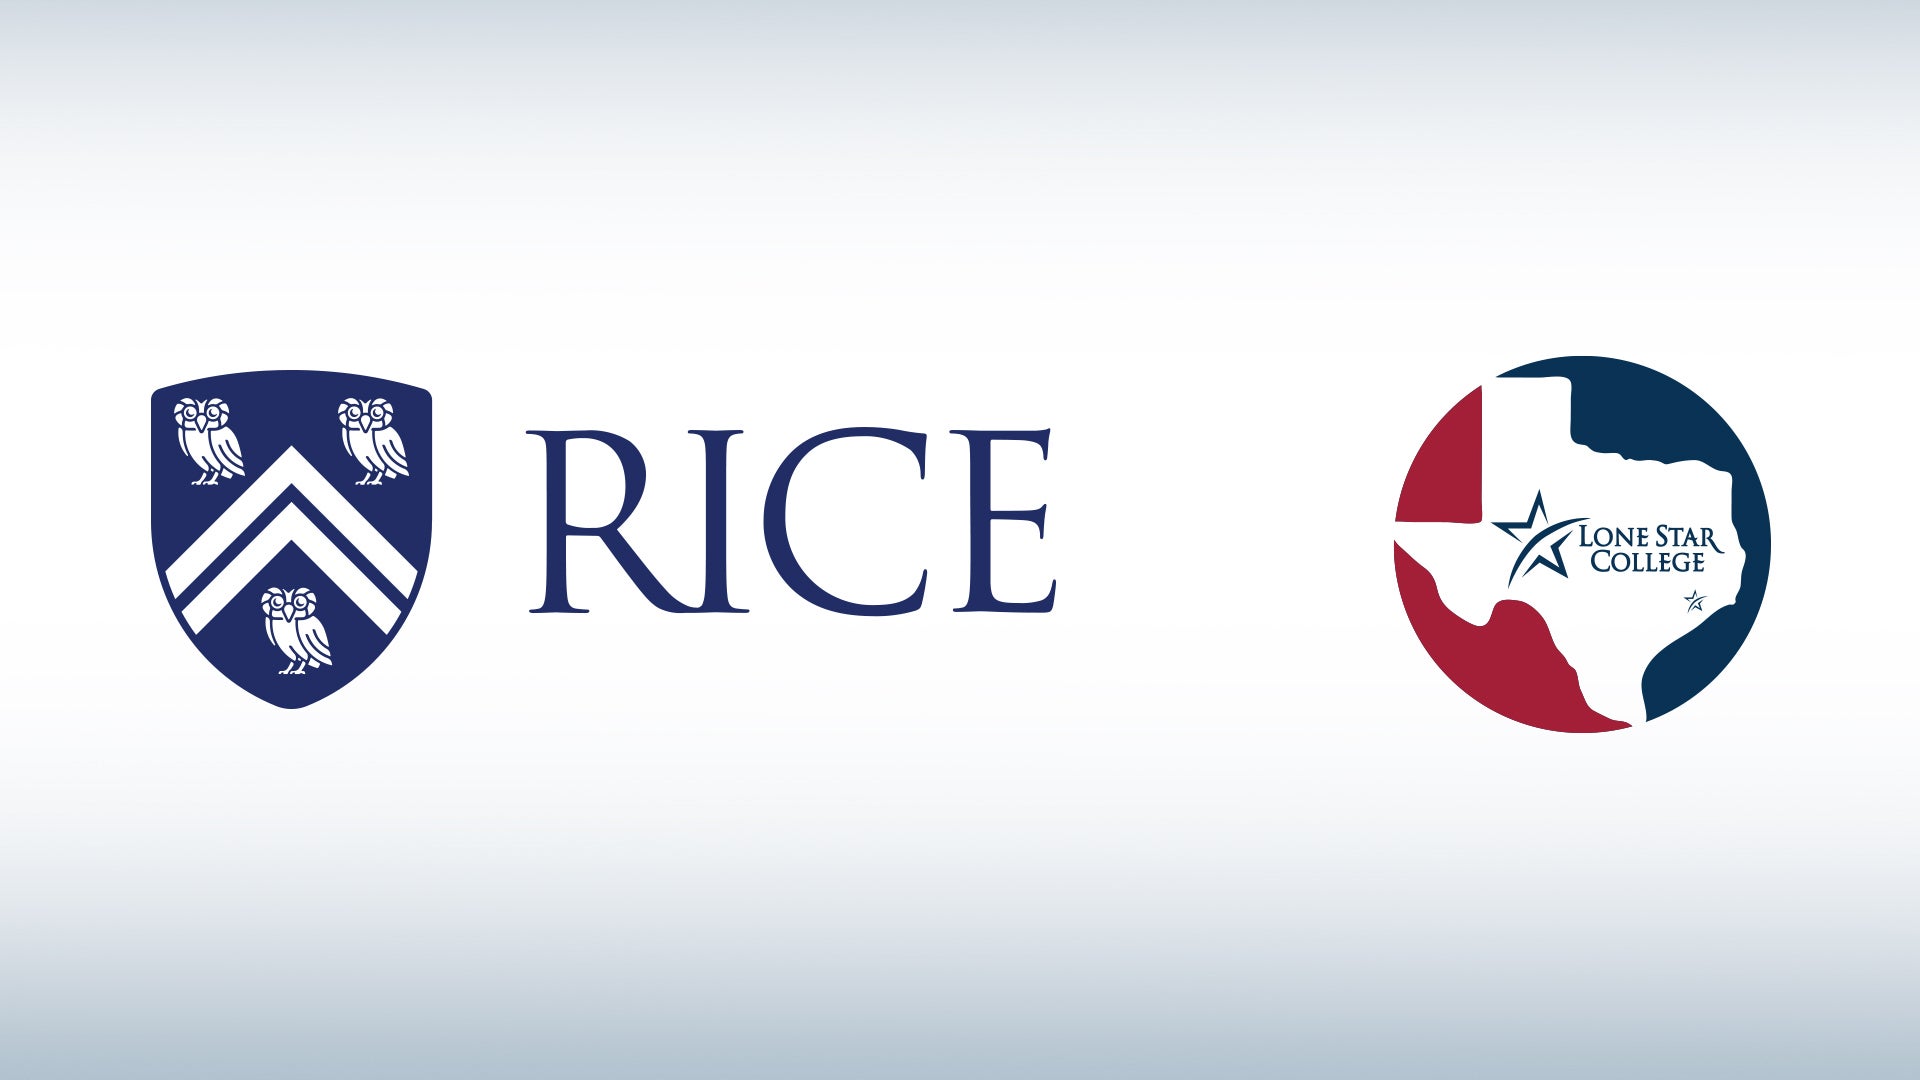 Rice/Lone Star College logos